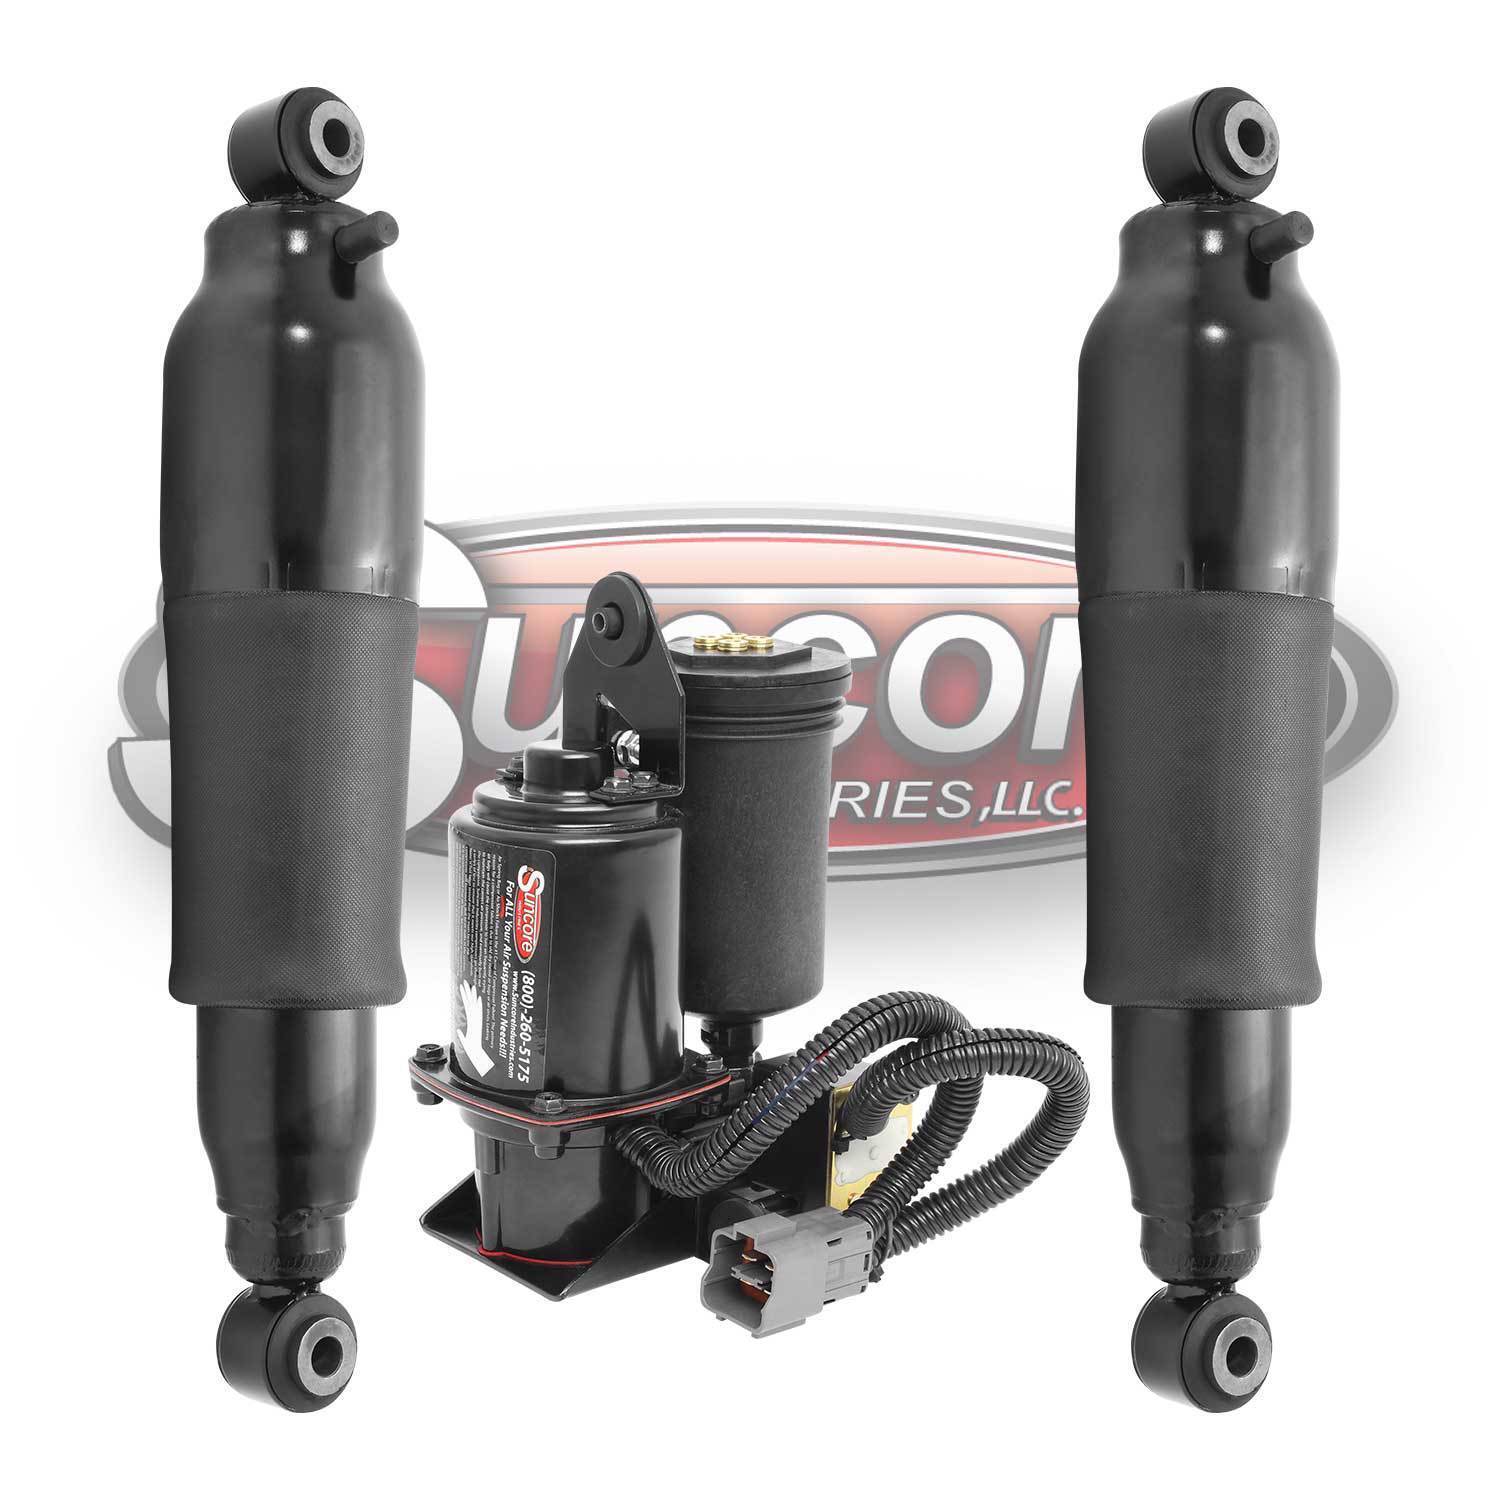 Rear Air Suspension Shock & Compressor Set for 2004-2010 Infiniti QX56